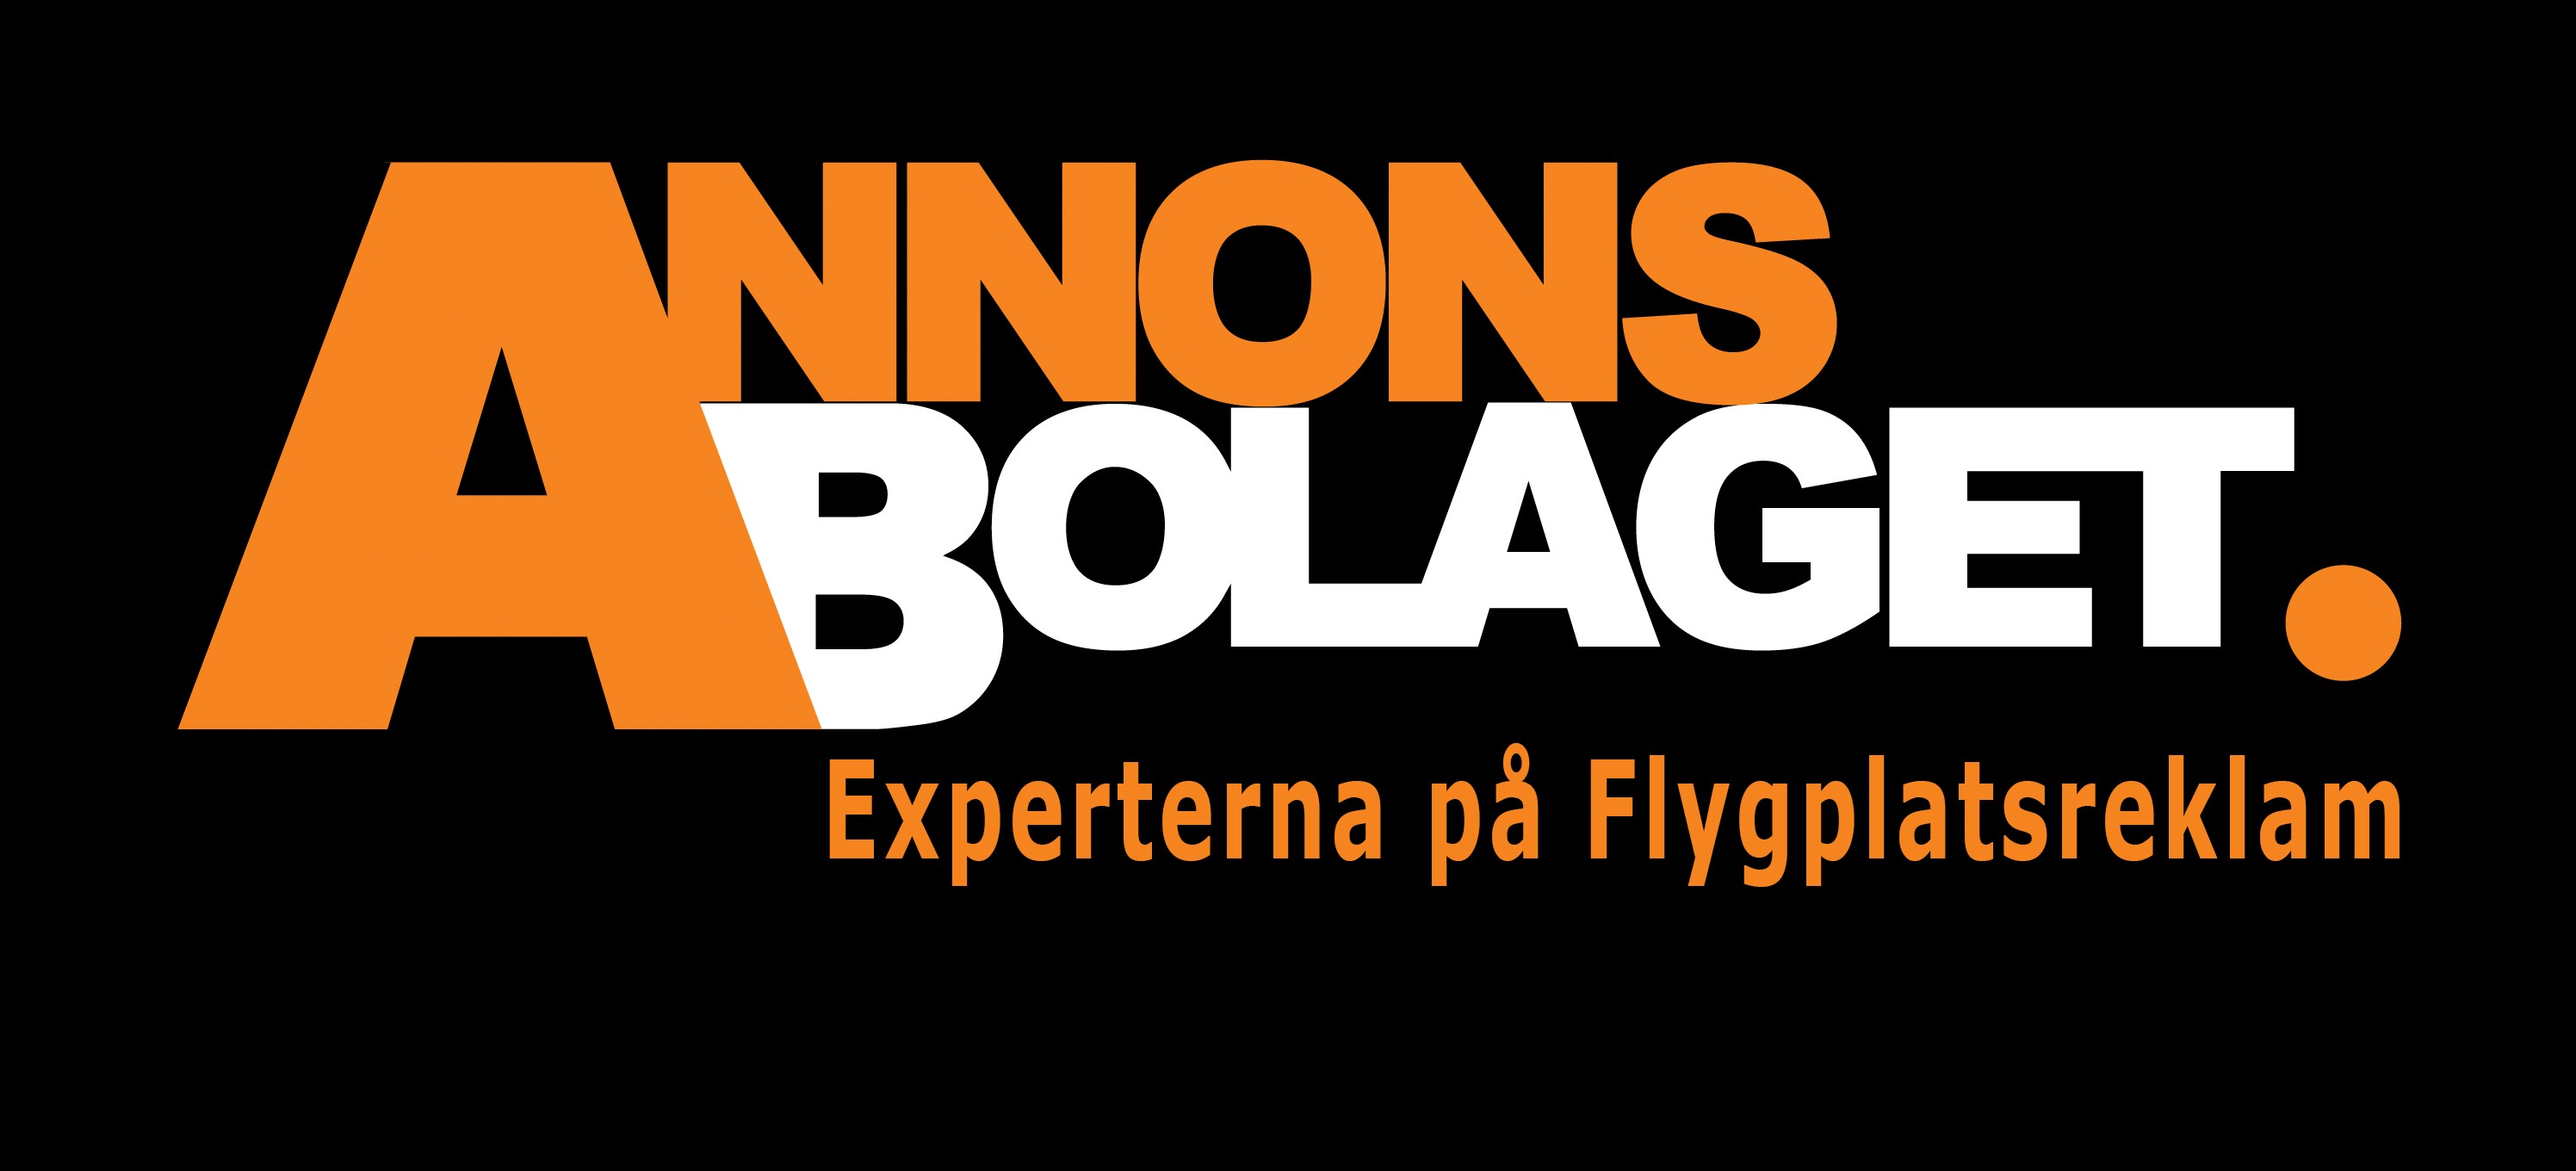 Annonsbolaget logotyp